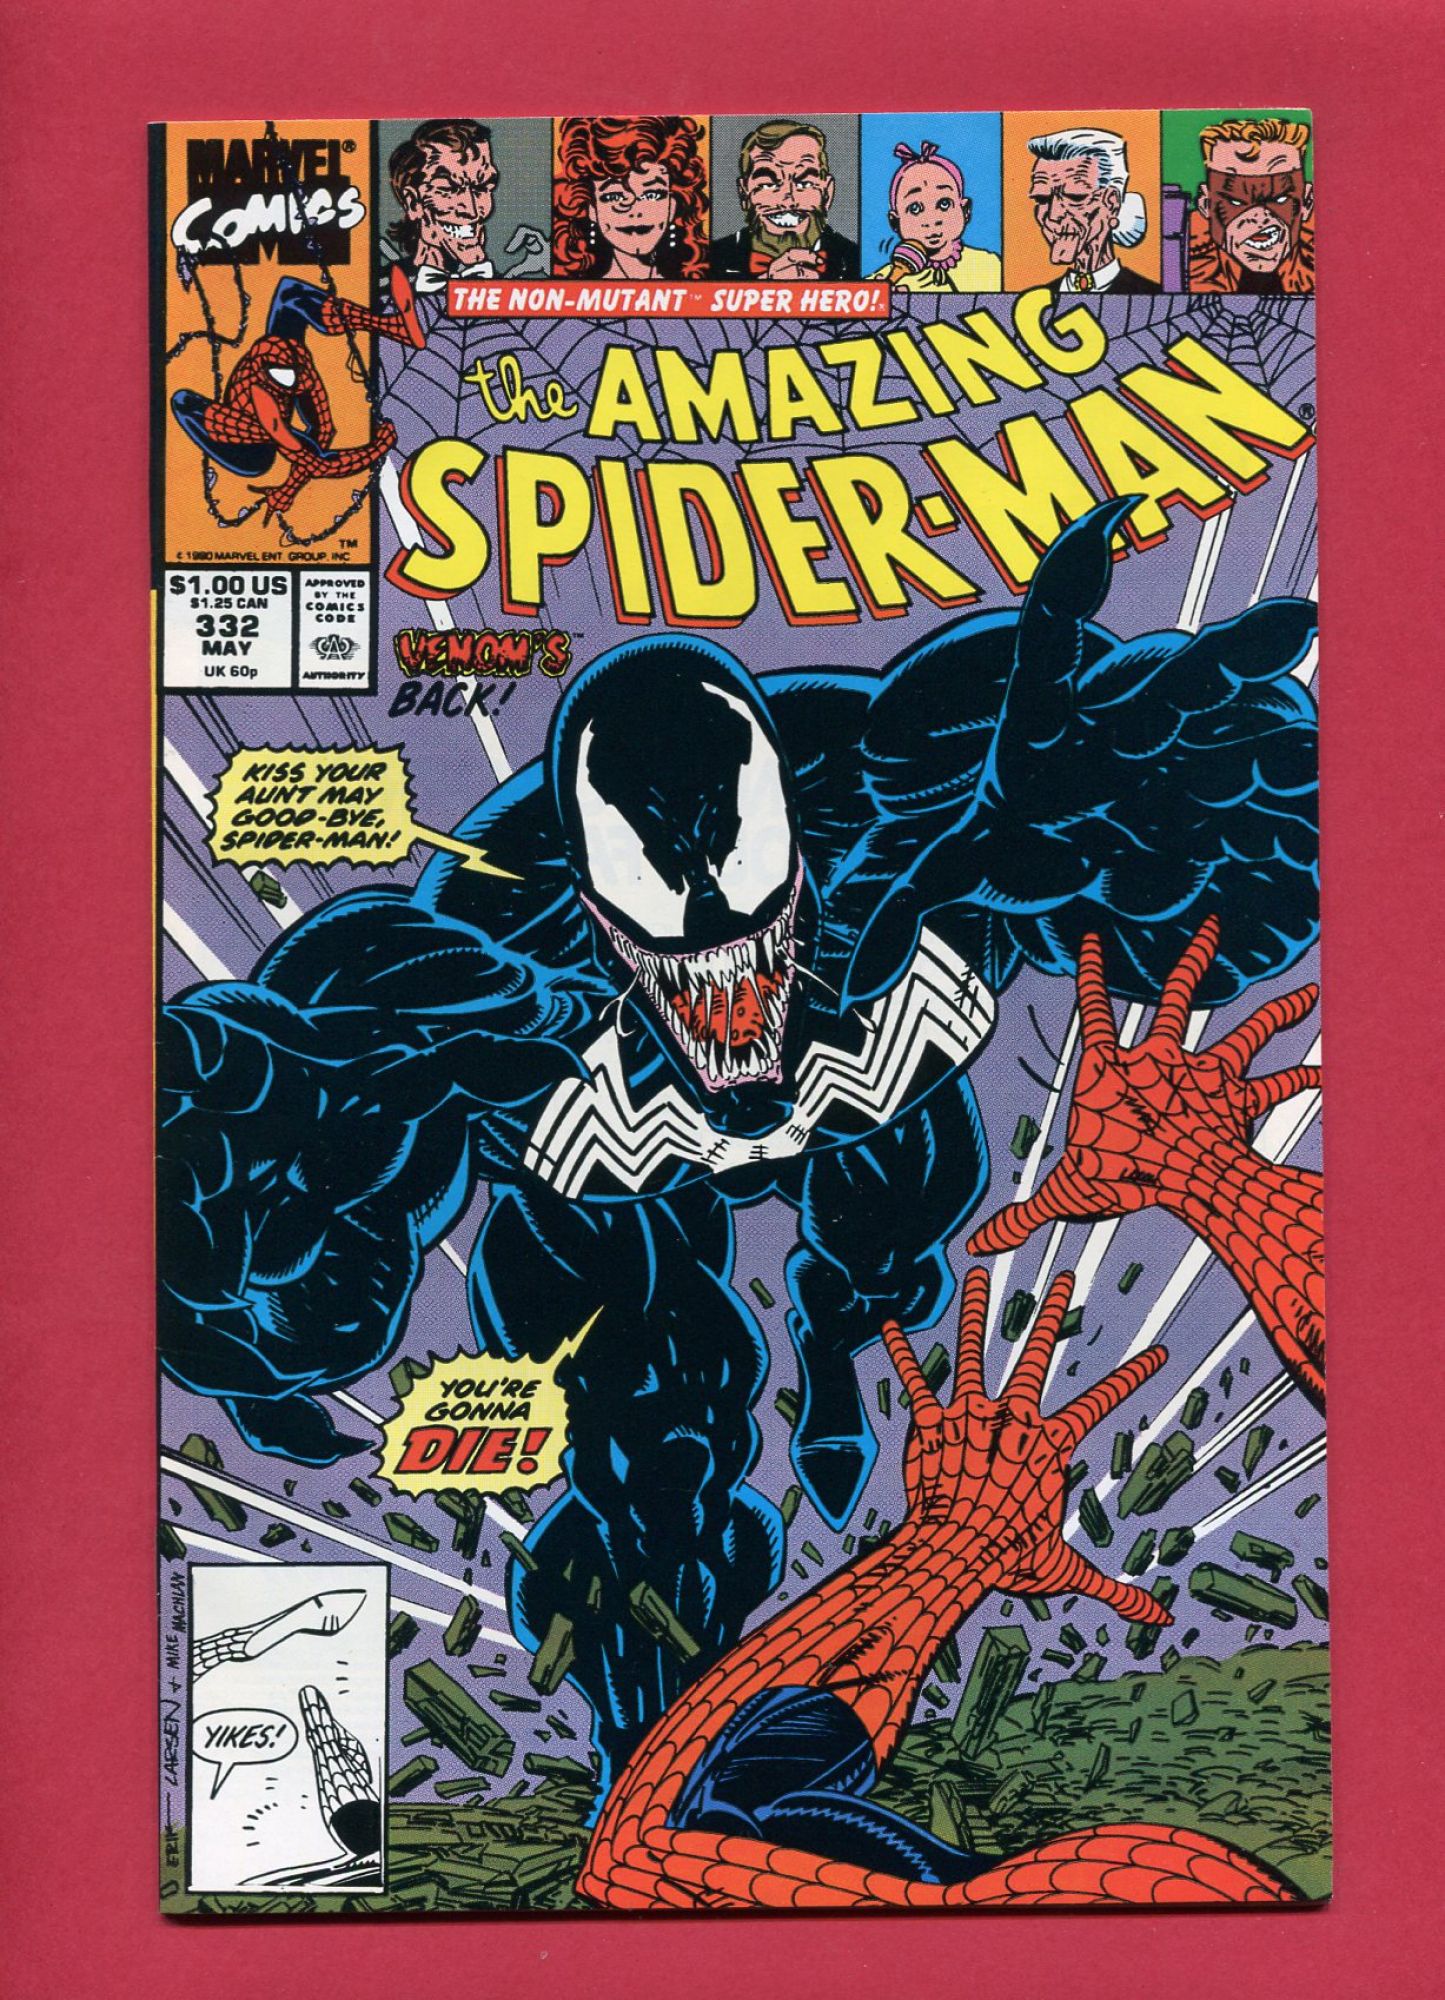 Amazing Spider-Man #332, May 1990, 9.2 NM-